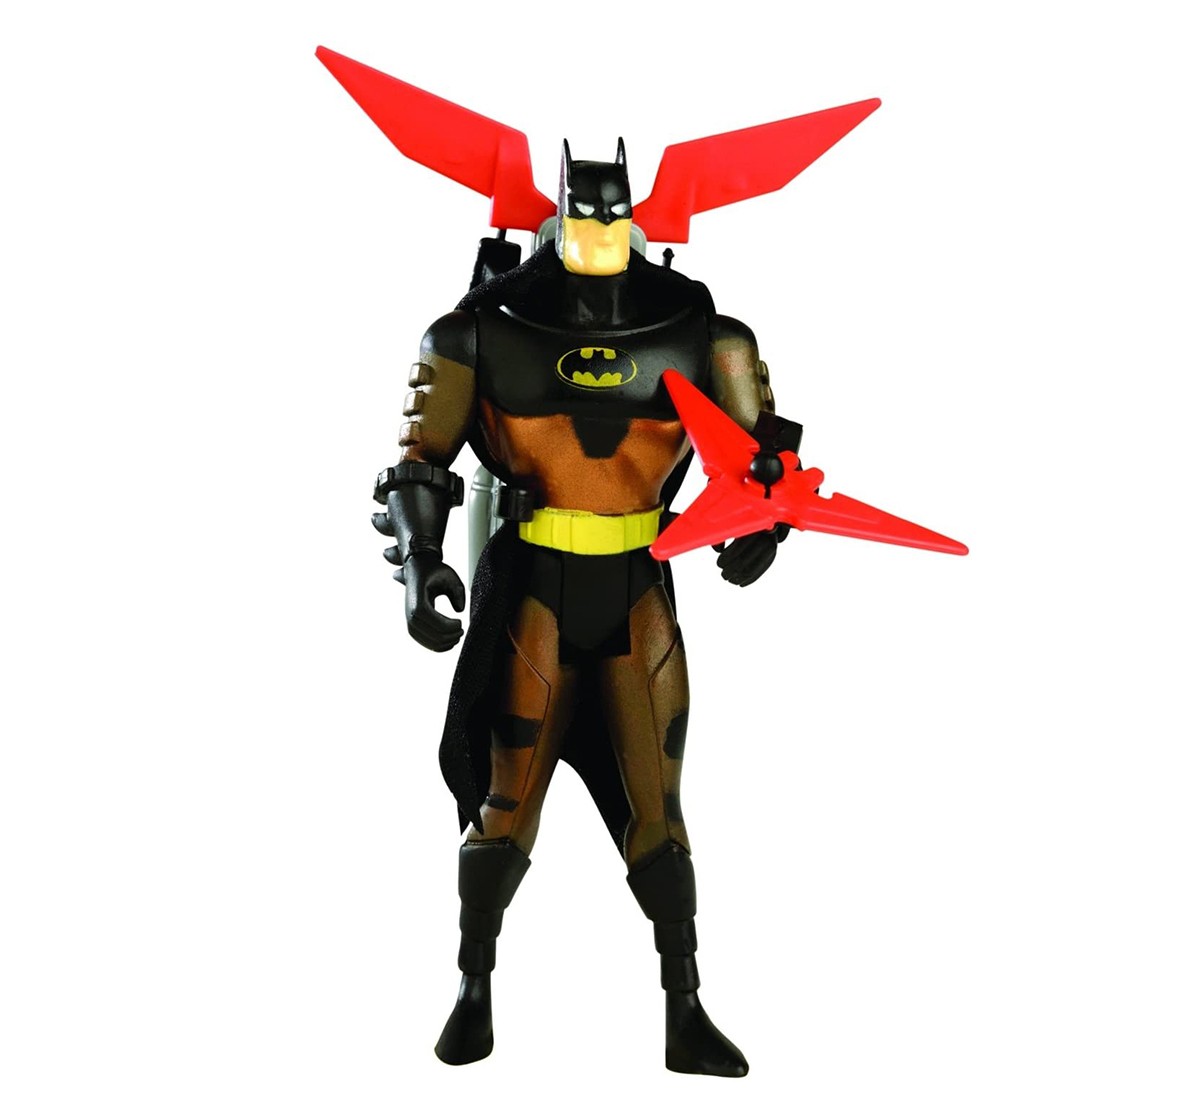 Funskool Knight Star Batman Action Figure,  2Y+ (Multicolor)